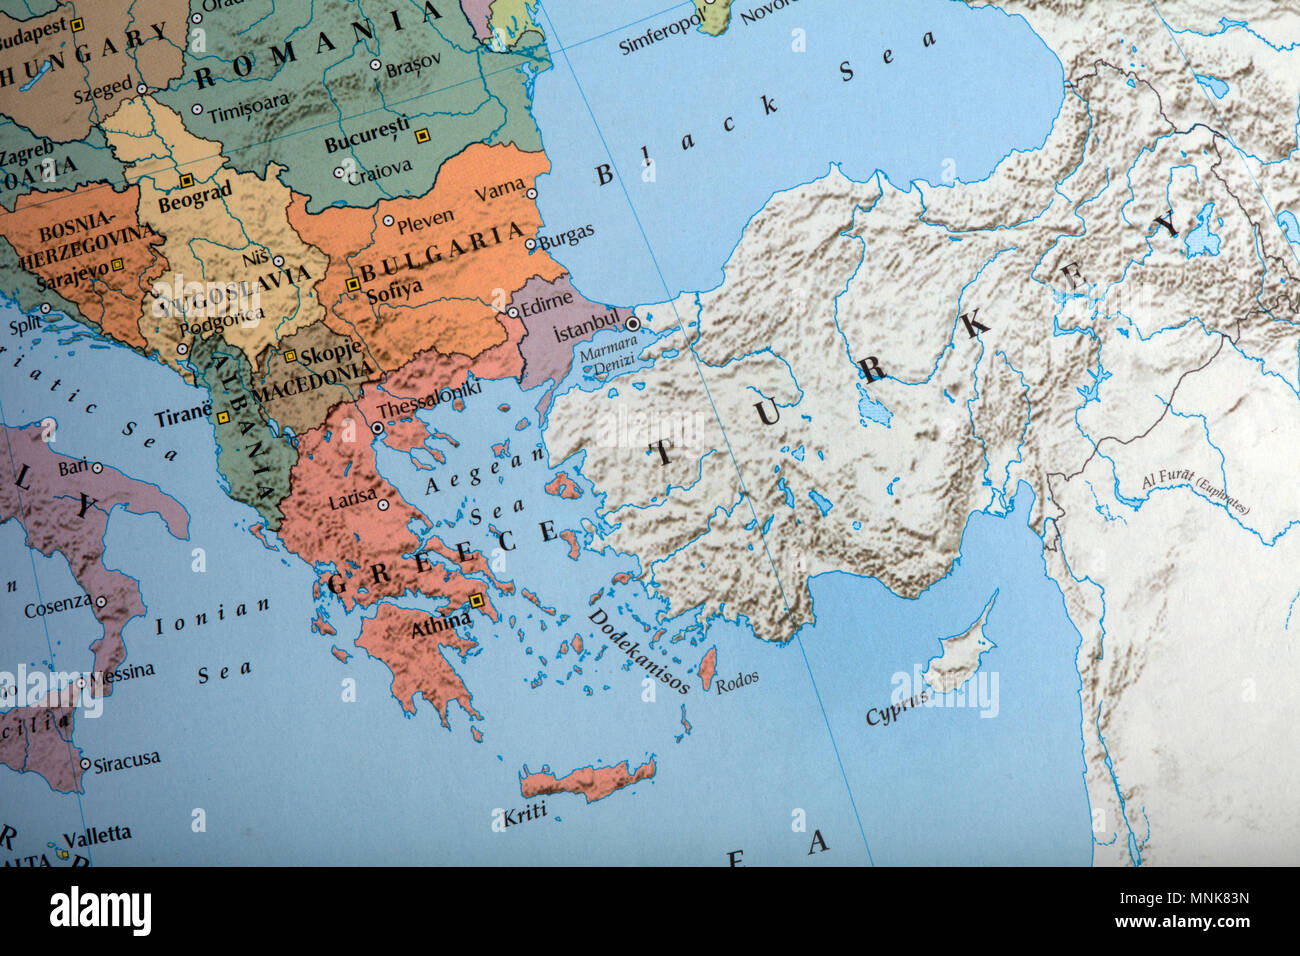 map of te balkans countries illustrative editorial Stock Photo